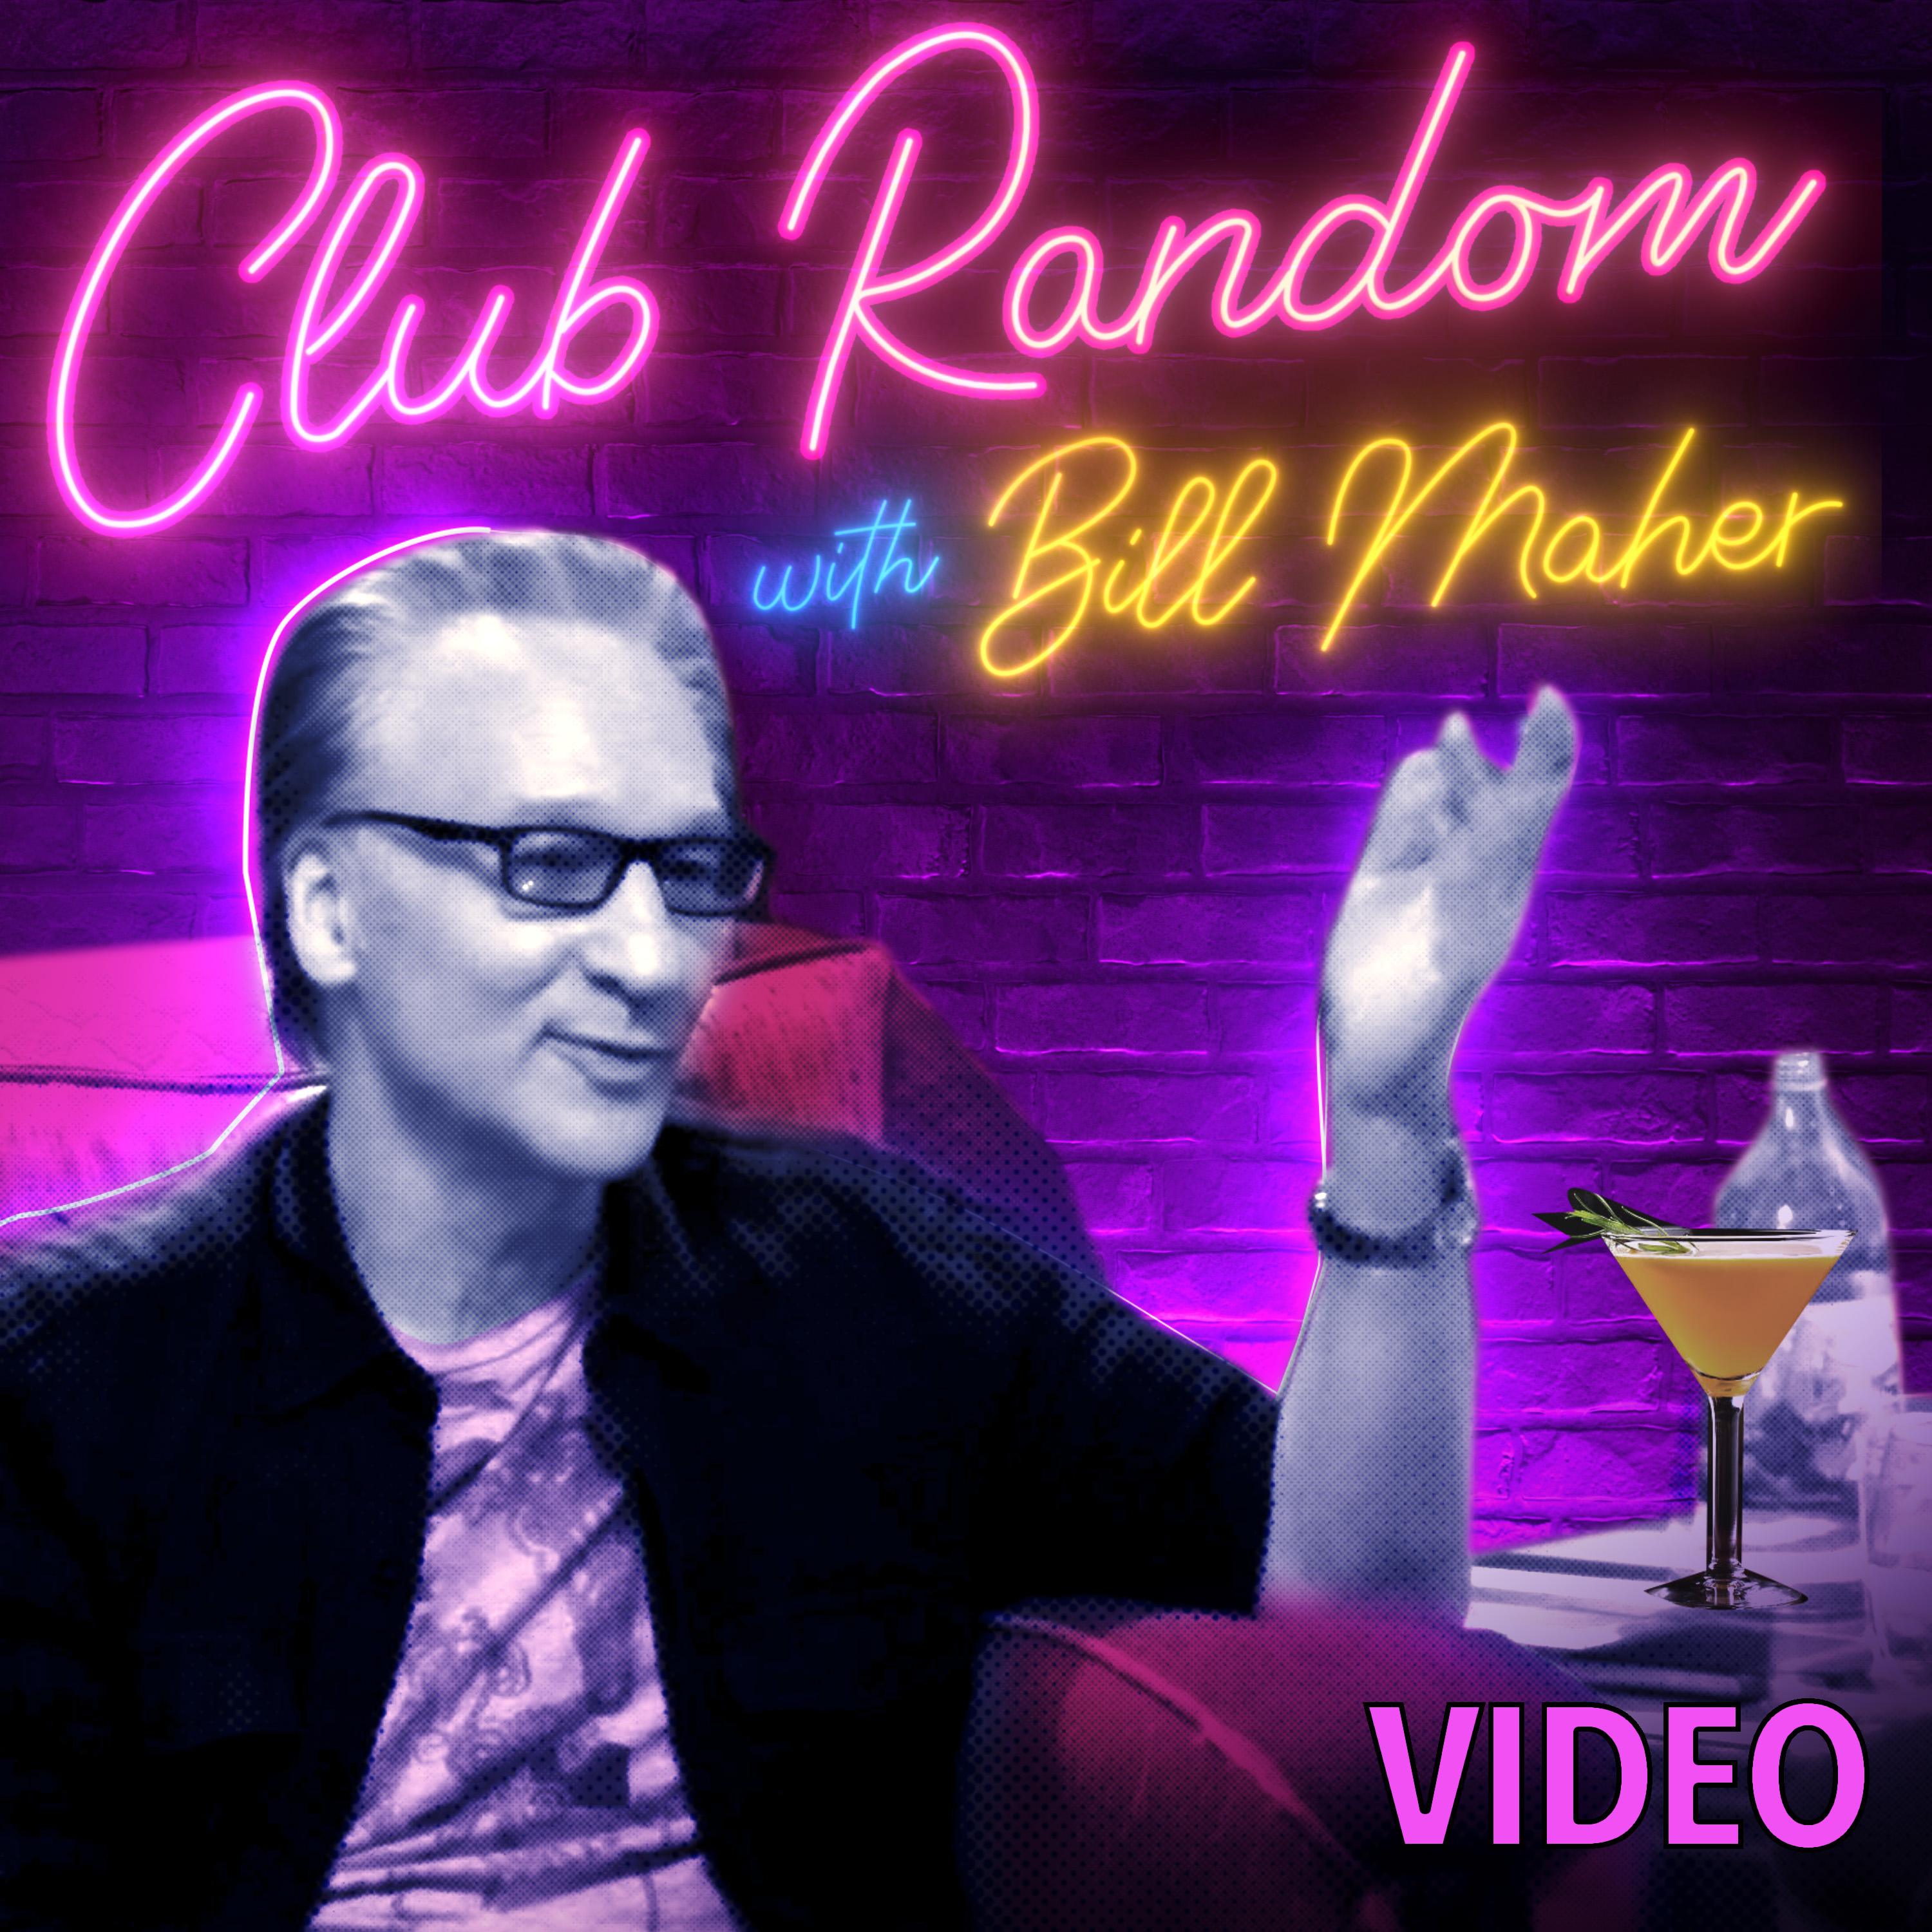 Video: Chris Robinson | Club Random with Bill Maher